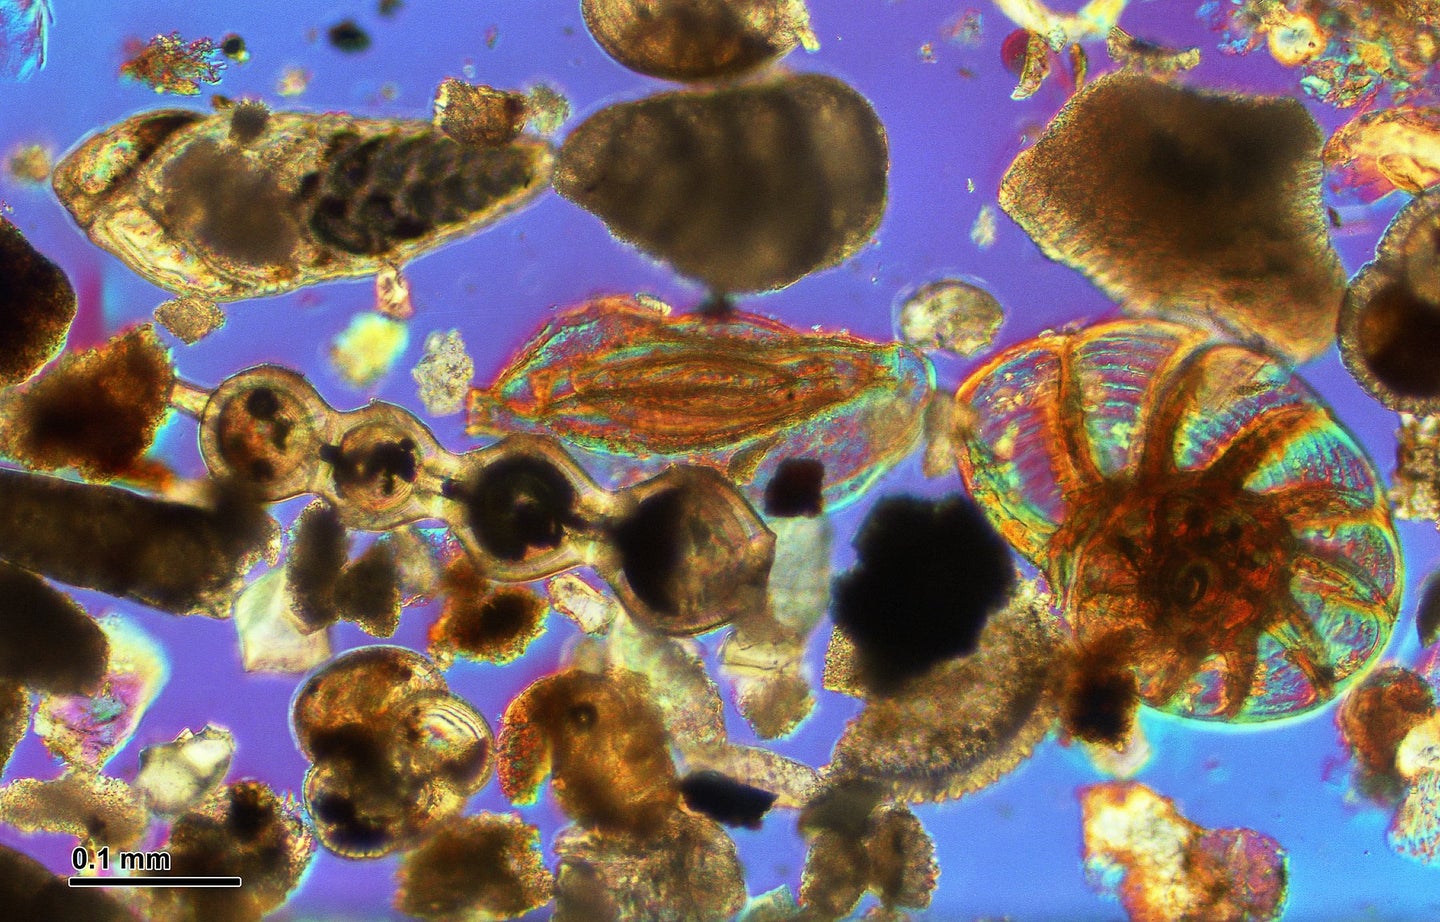 Foraminiferas are tiny marine organisms with intricate shells.